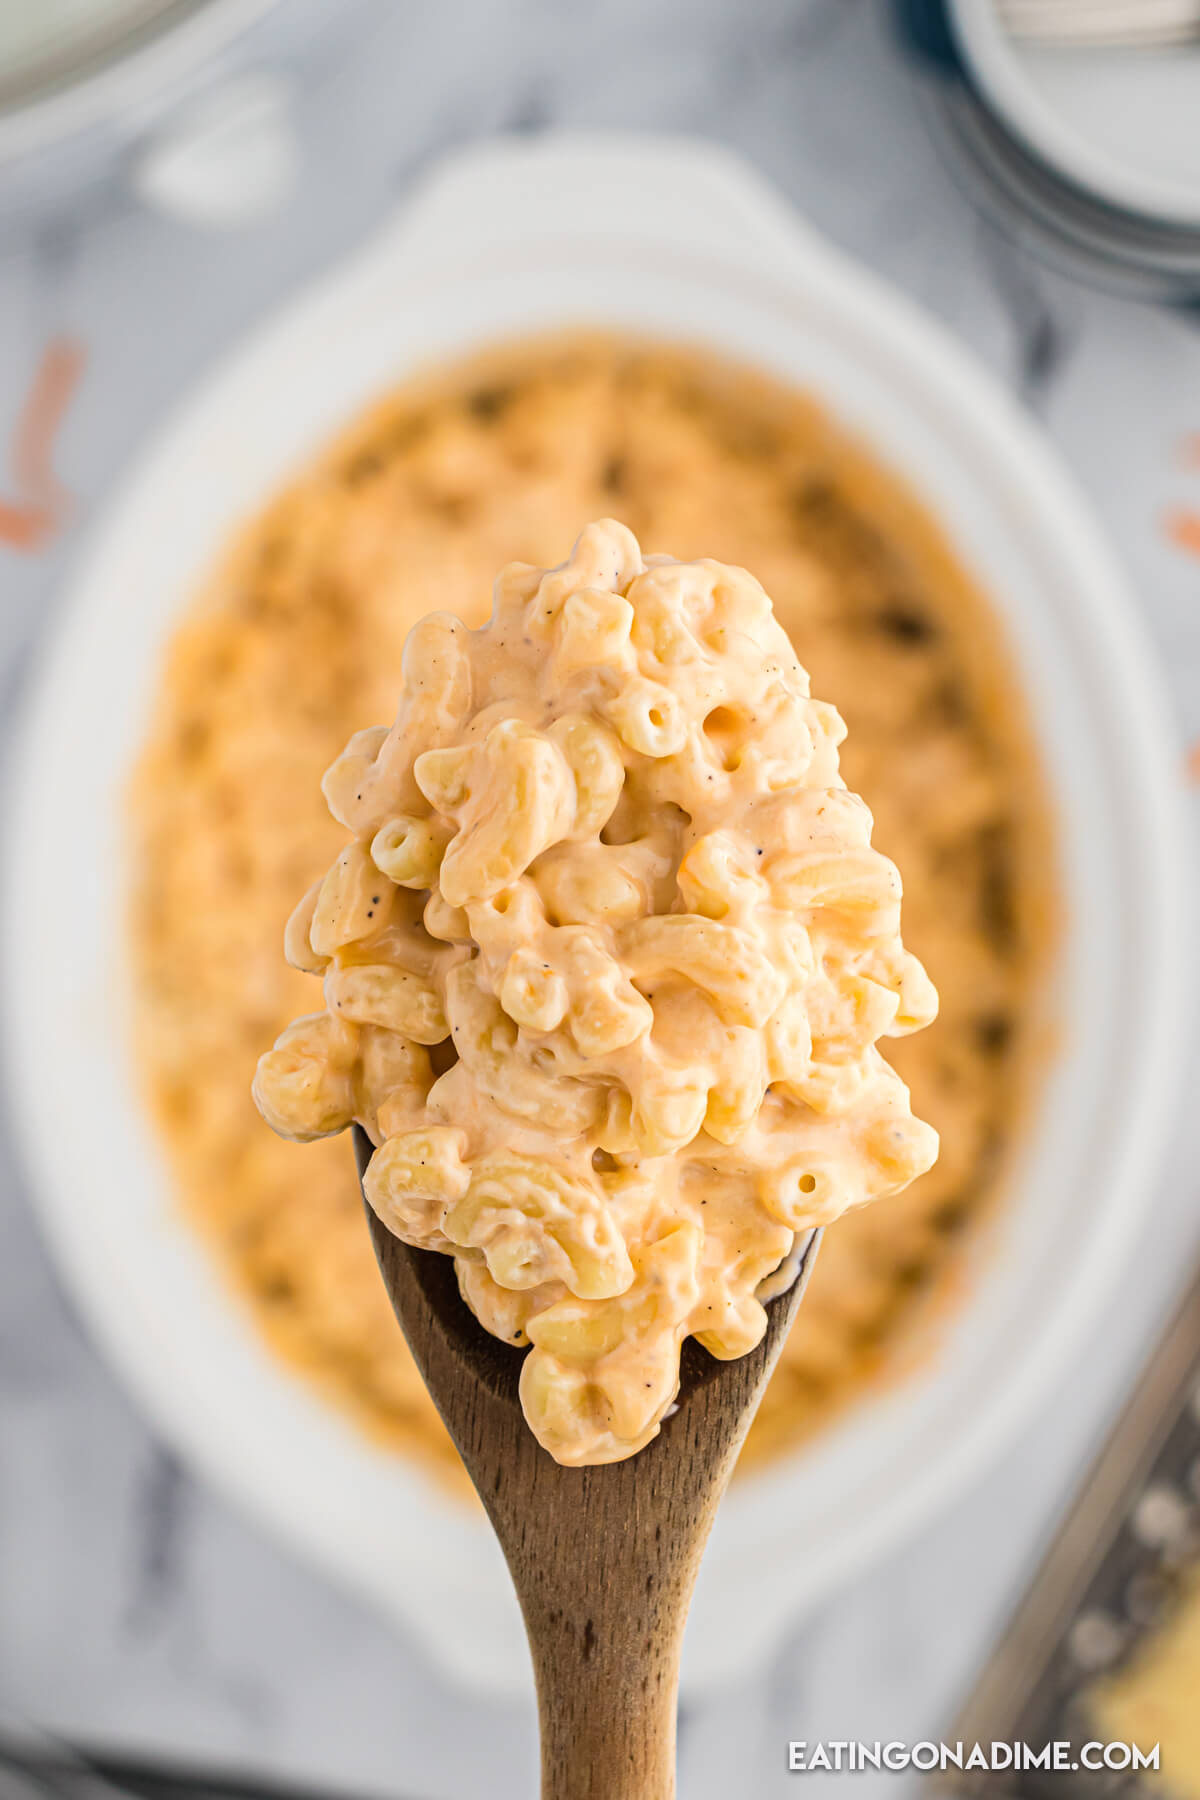 https://www.eatingonadime.com/wp-content/uploads/2019/06/Crock-Pot-Macaroni-and-Cheese-1200-x-1800-6442.jpg